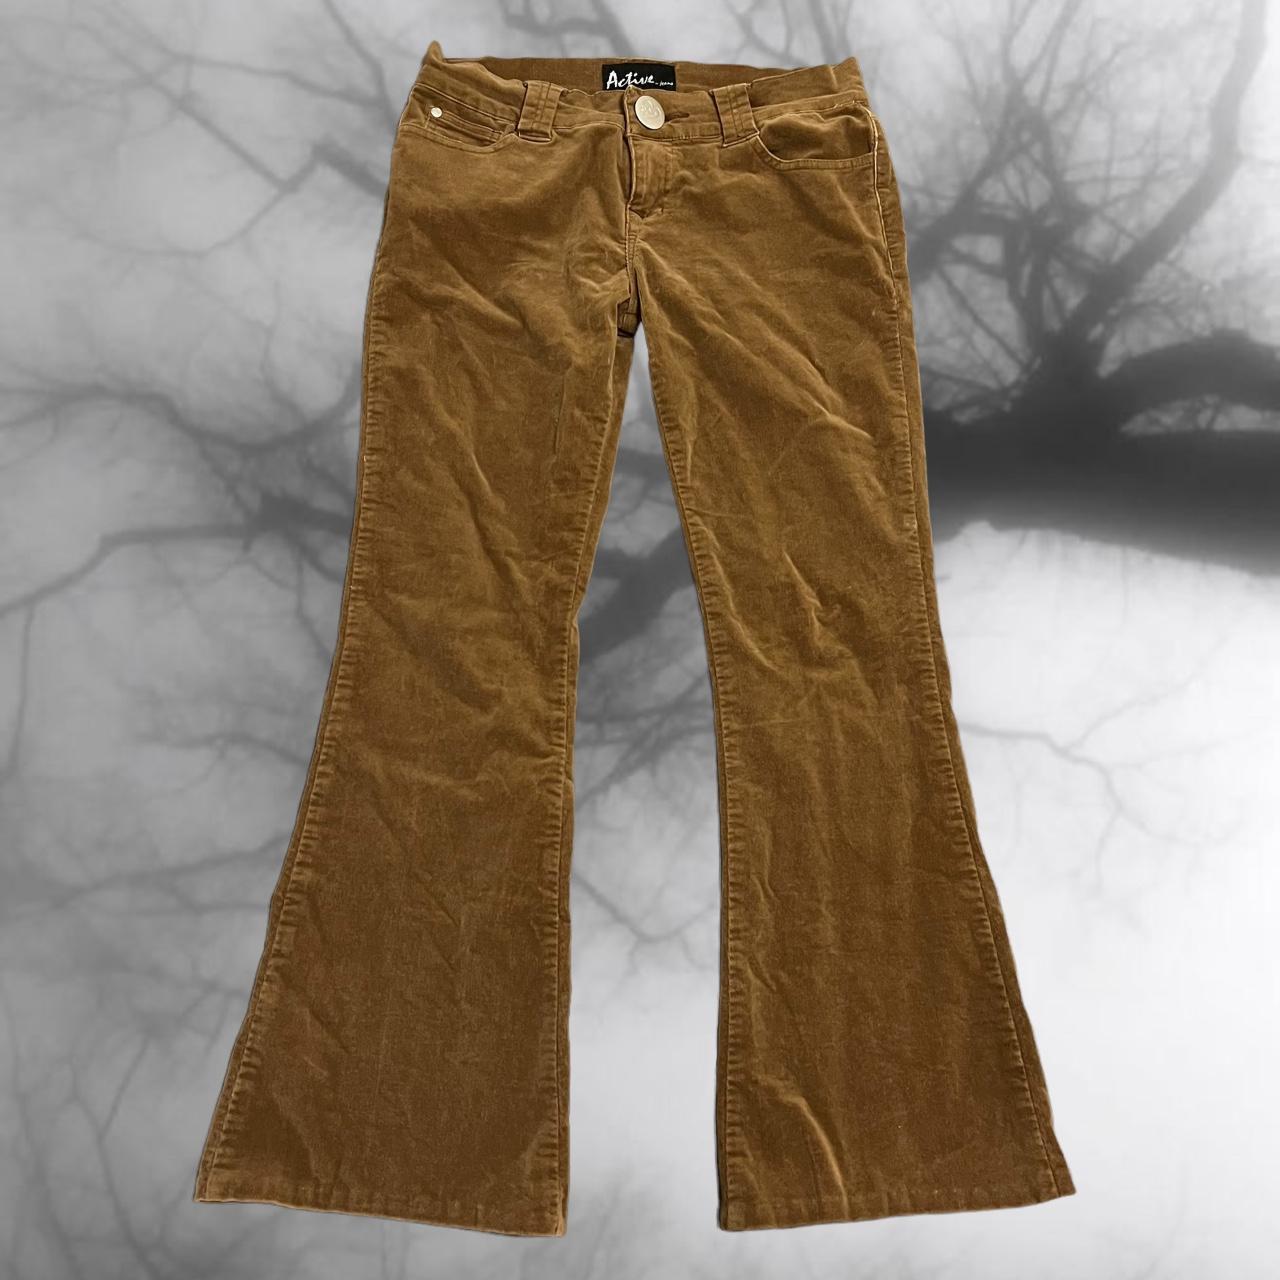 dark khaki/brown corduroy low rise flare pants,... - Depop